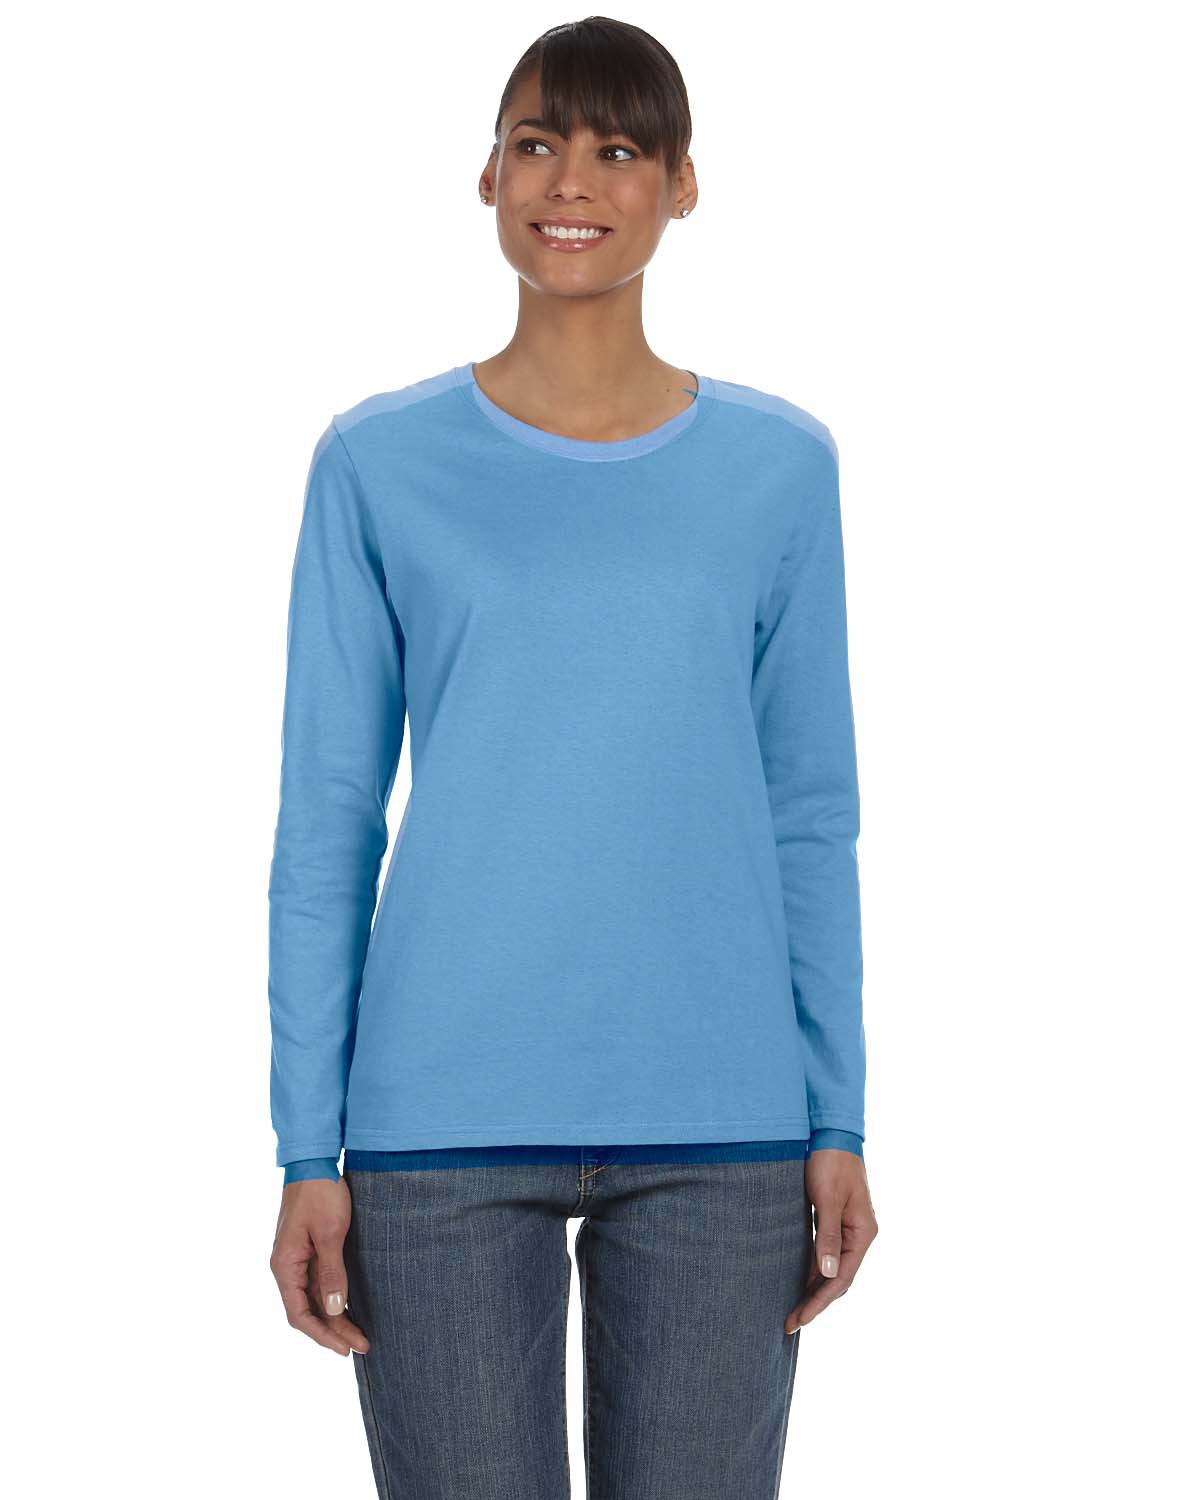 sizes s to xxl Womens tops Gildan Softstyle Ladies' Long Sleeve T–Shirt 